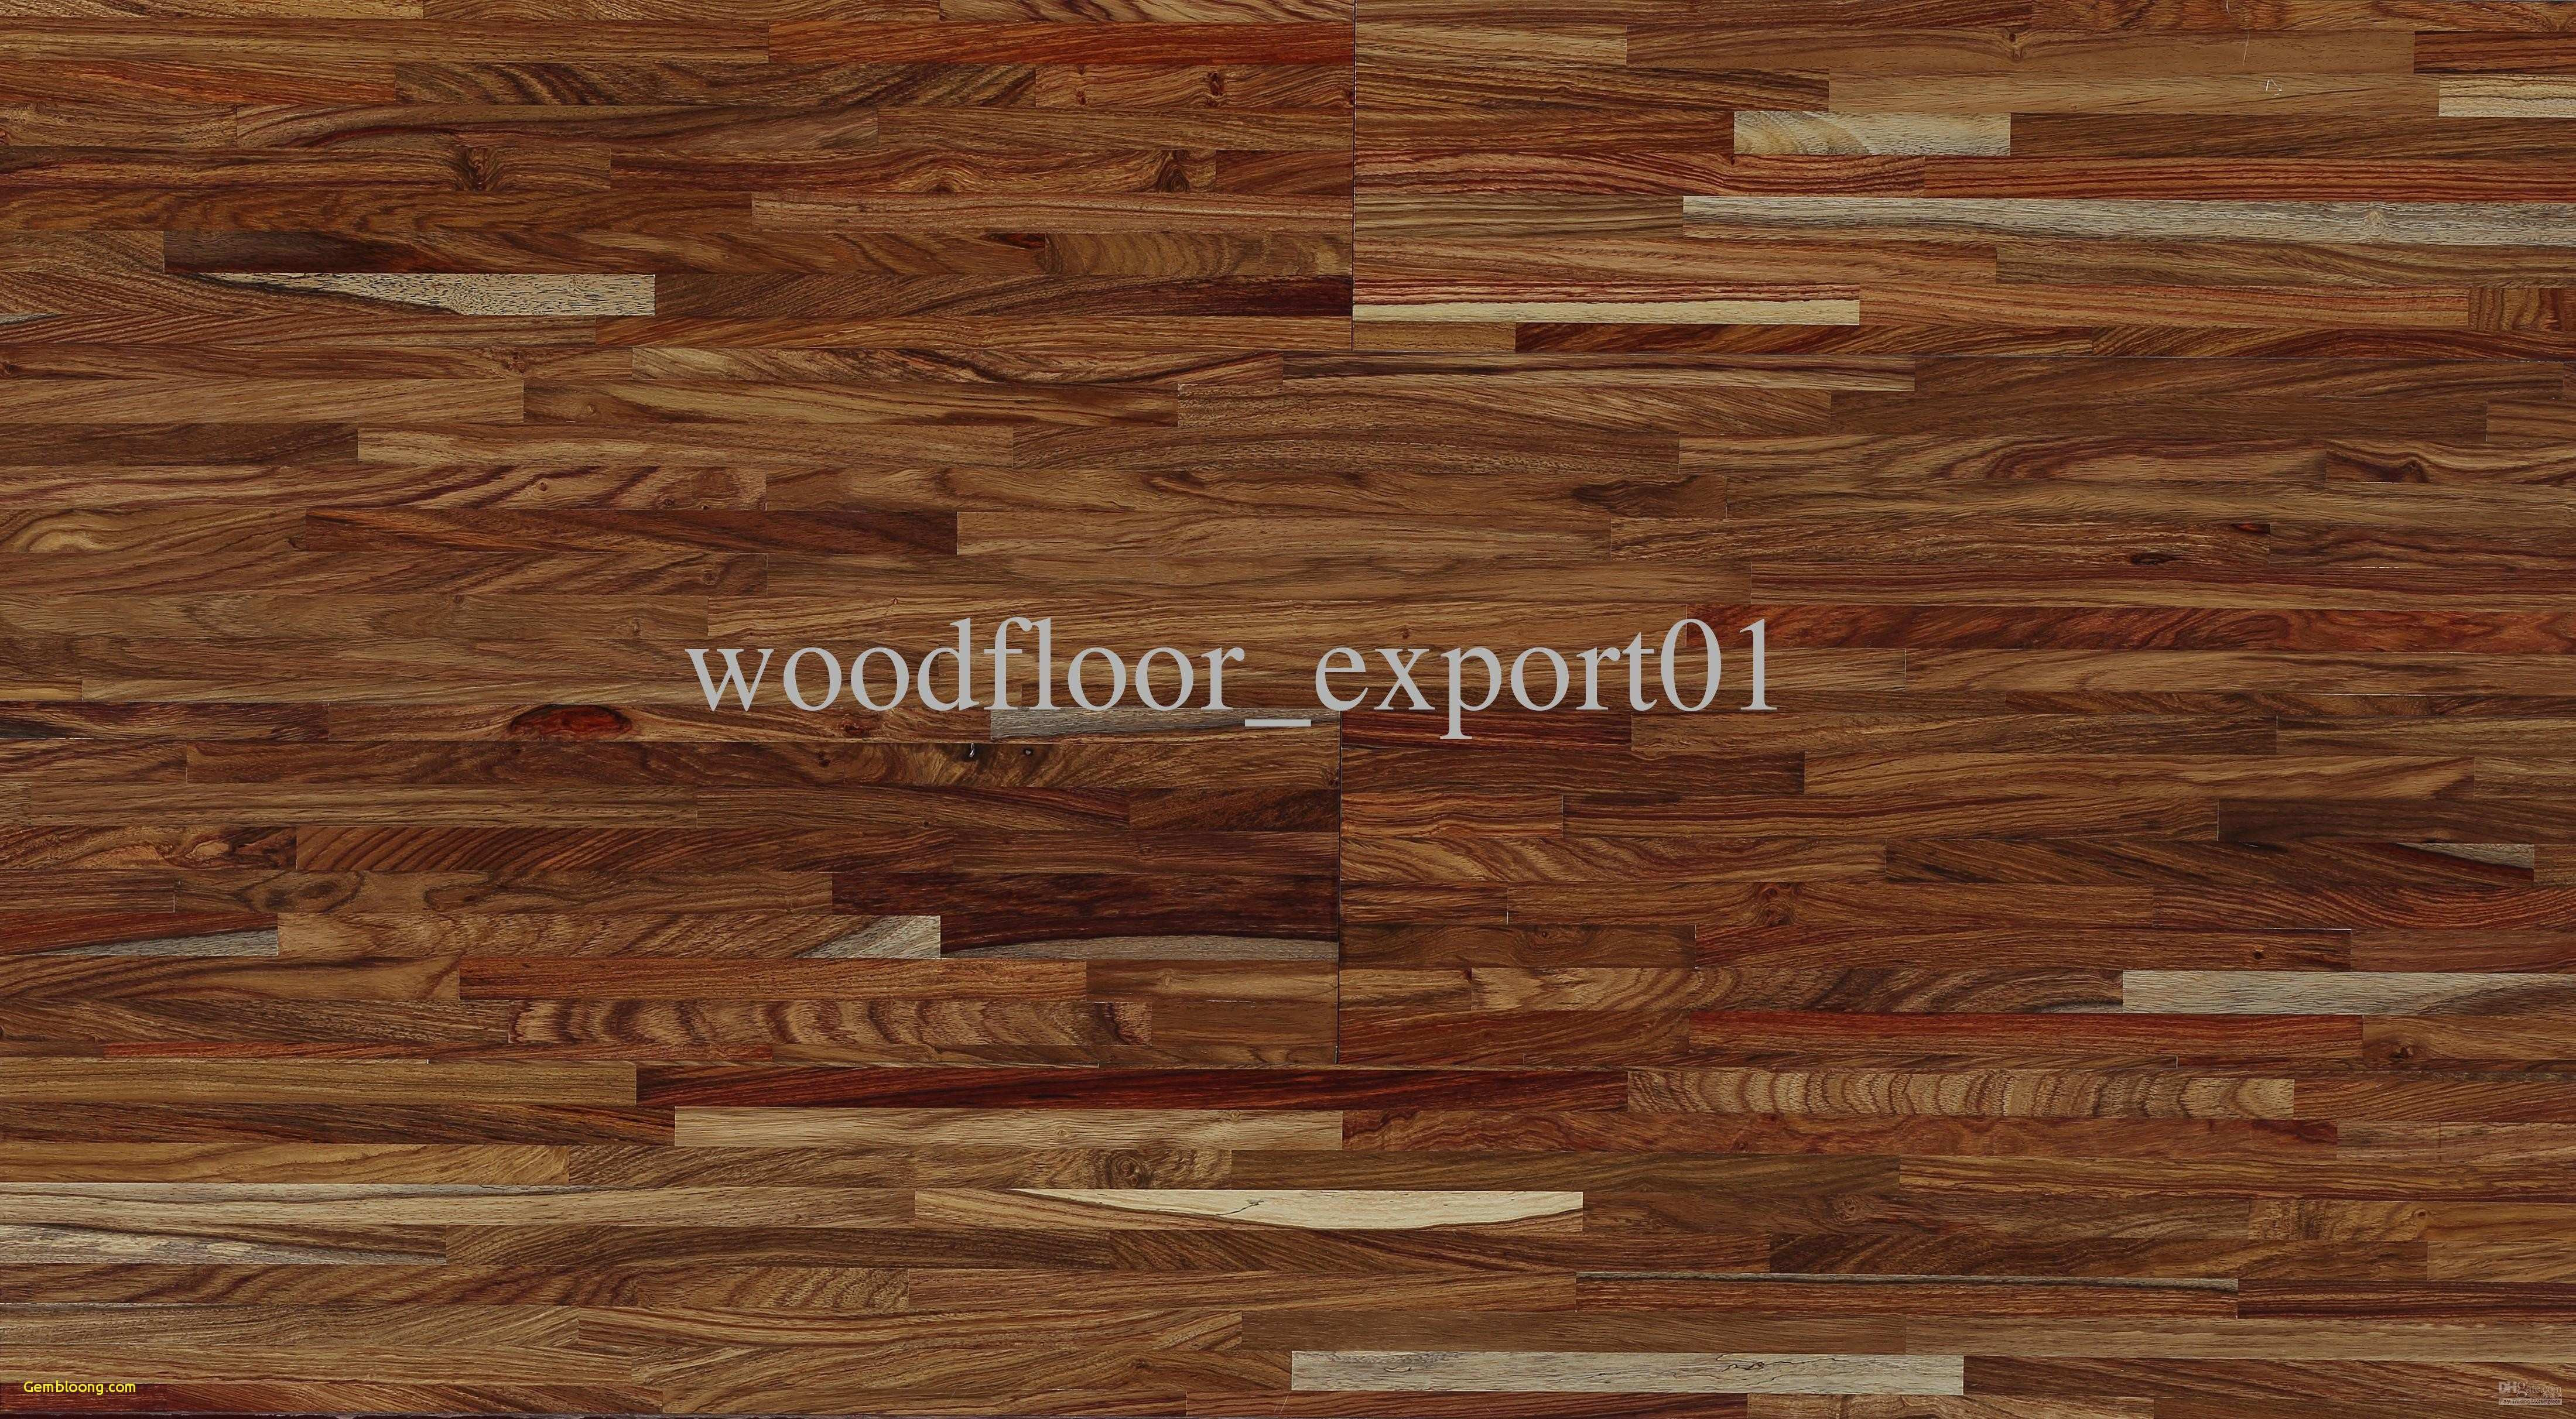 best type of wood for hardwood floors of hardwood flooring designs facesinnature in hardwood flooring designs flooring nj furniture design hard wood flooring new 0d grace place